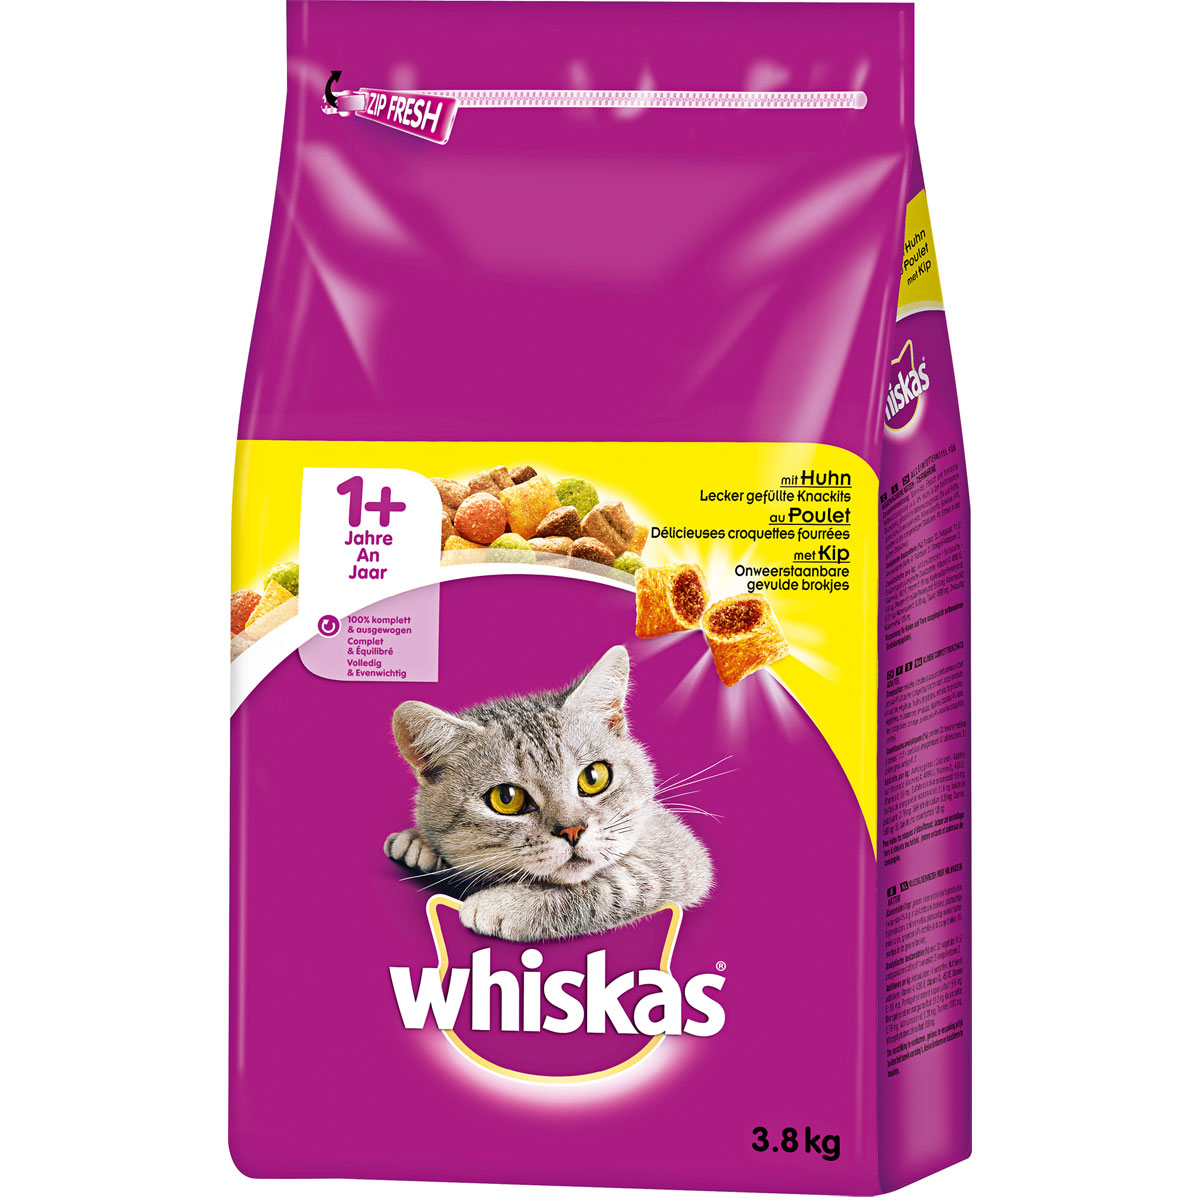 Whiskas Katzenfutter mit Huhn 3,8 kg | 935326